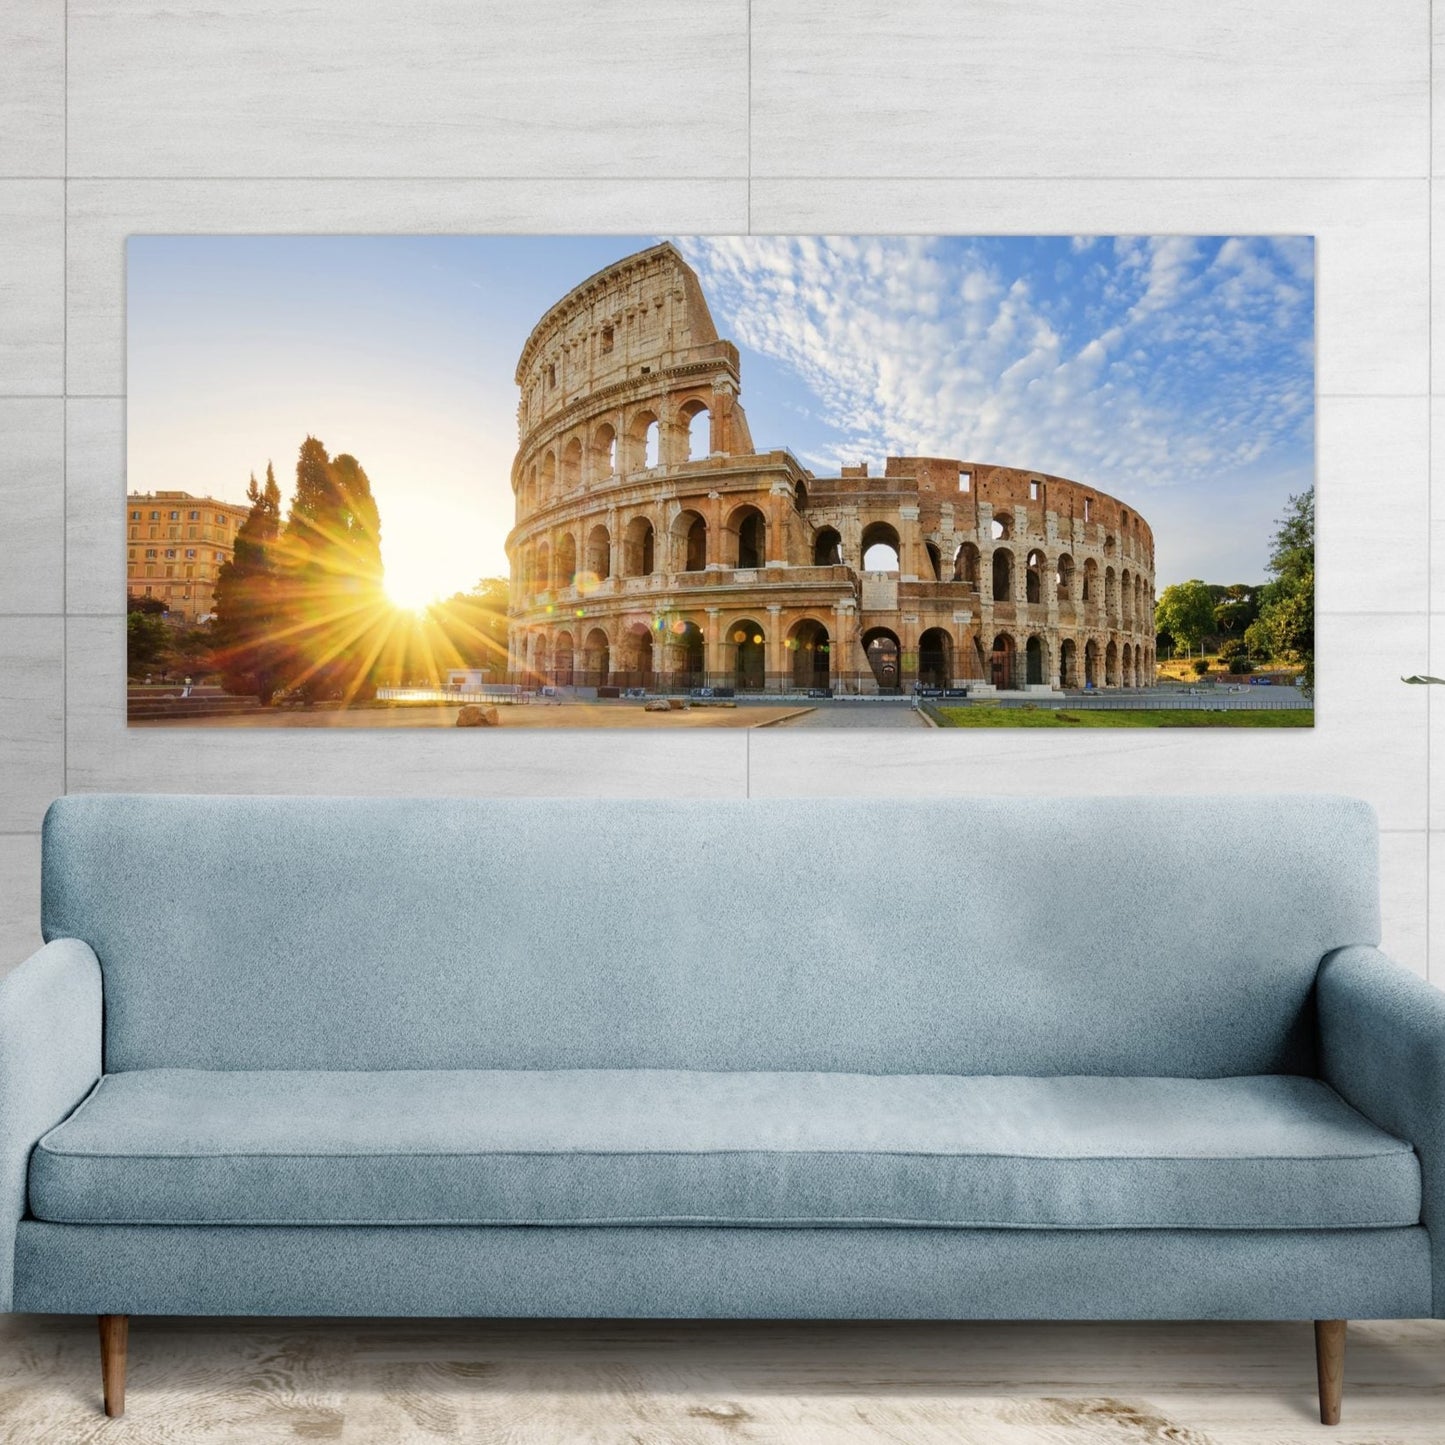 ROME Majestic Colosseum At Sunrise Wall Art Print